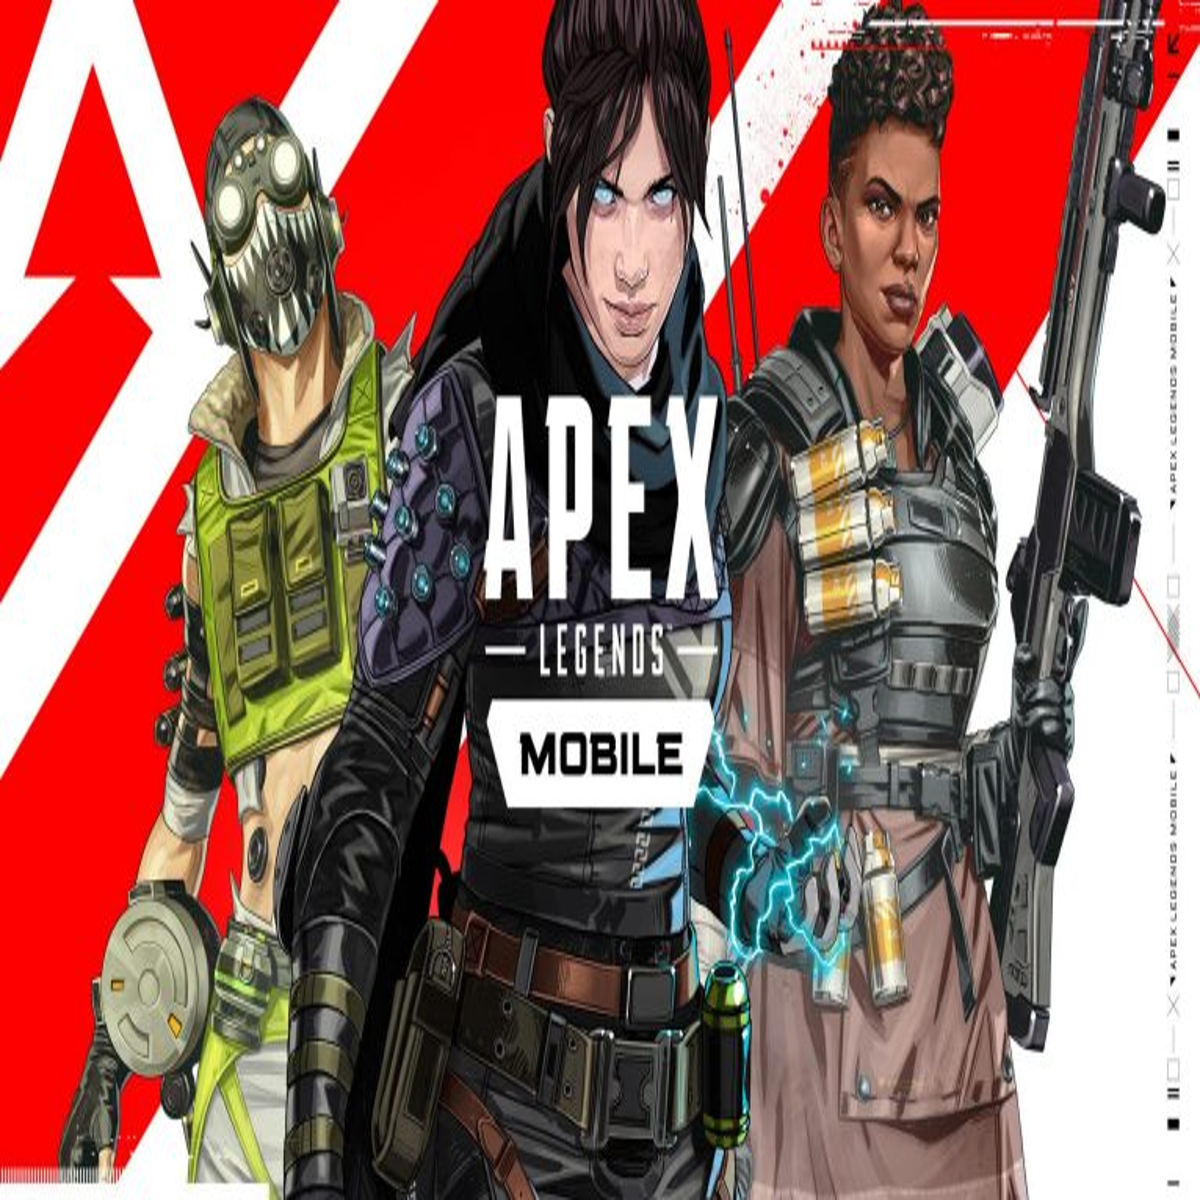 Apex Legends Mobile review - battle royale sticks the landing on